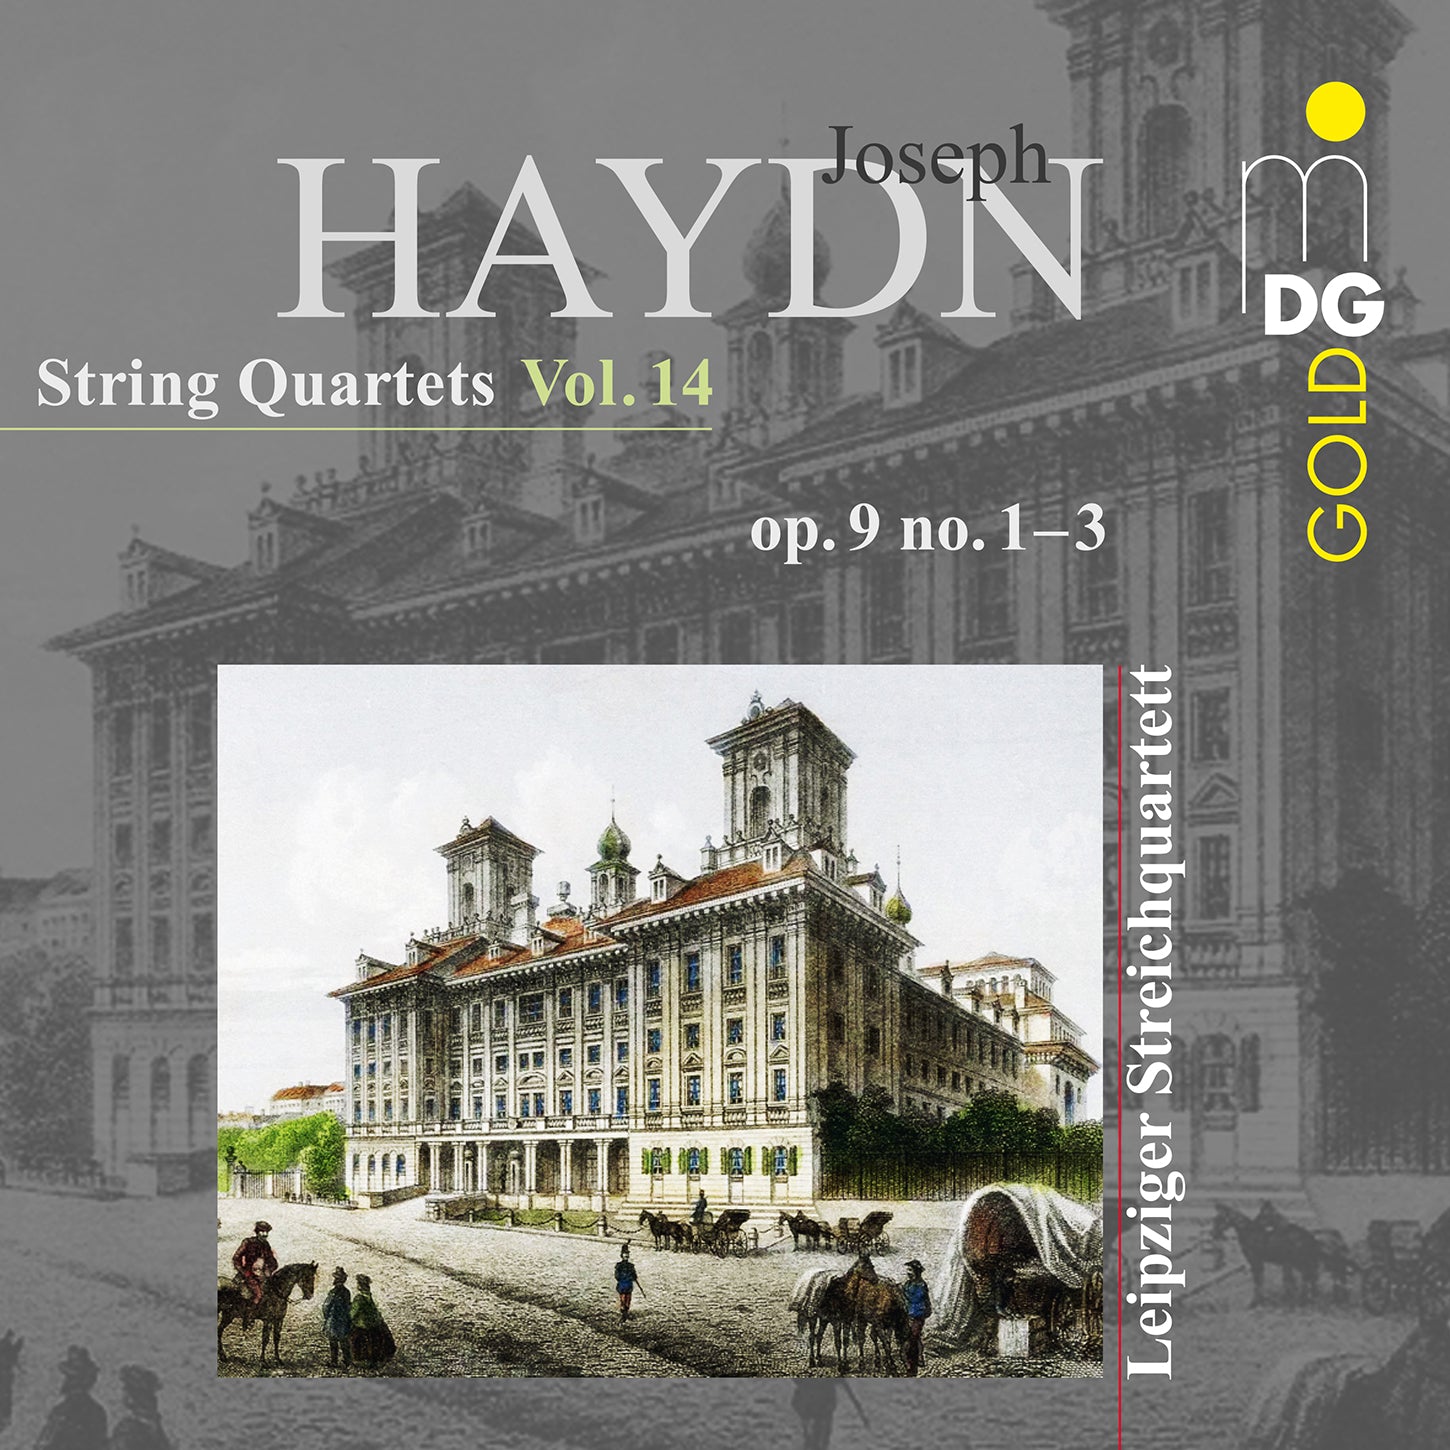 Haydn: String Quartets, Vol. 14 - Op. 9, No. 1, 2 & 3 / Leipzig String Quarte